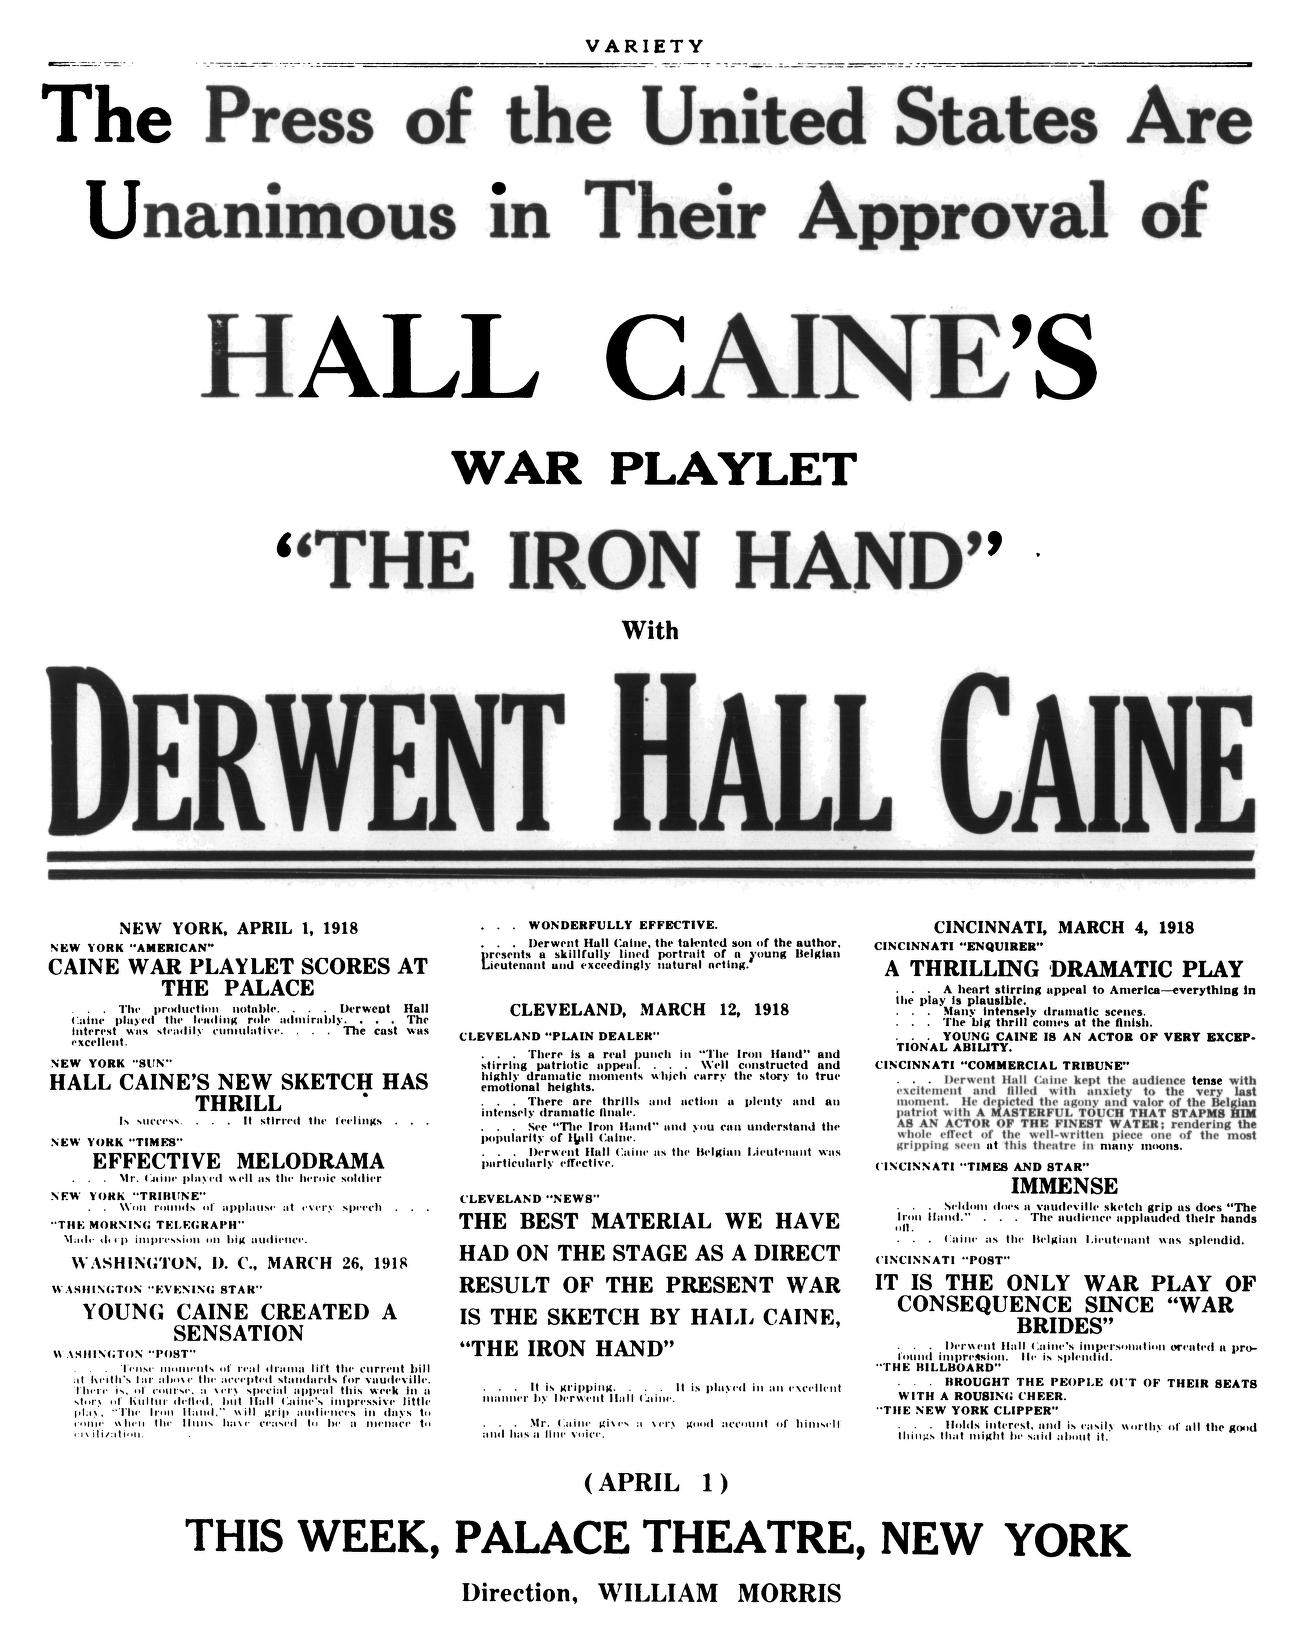 Variety (April 1918)